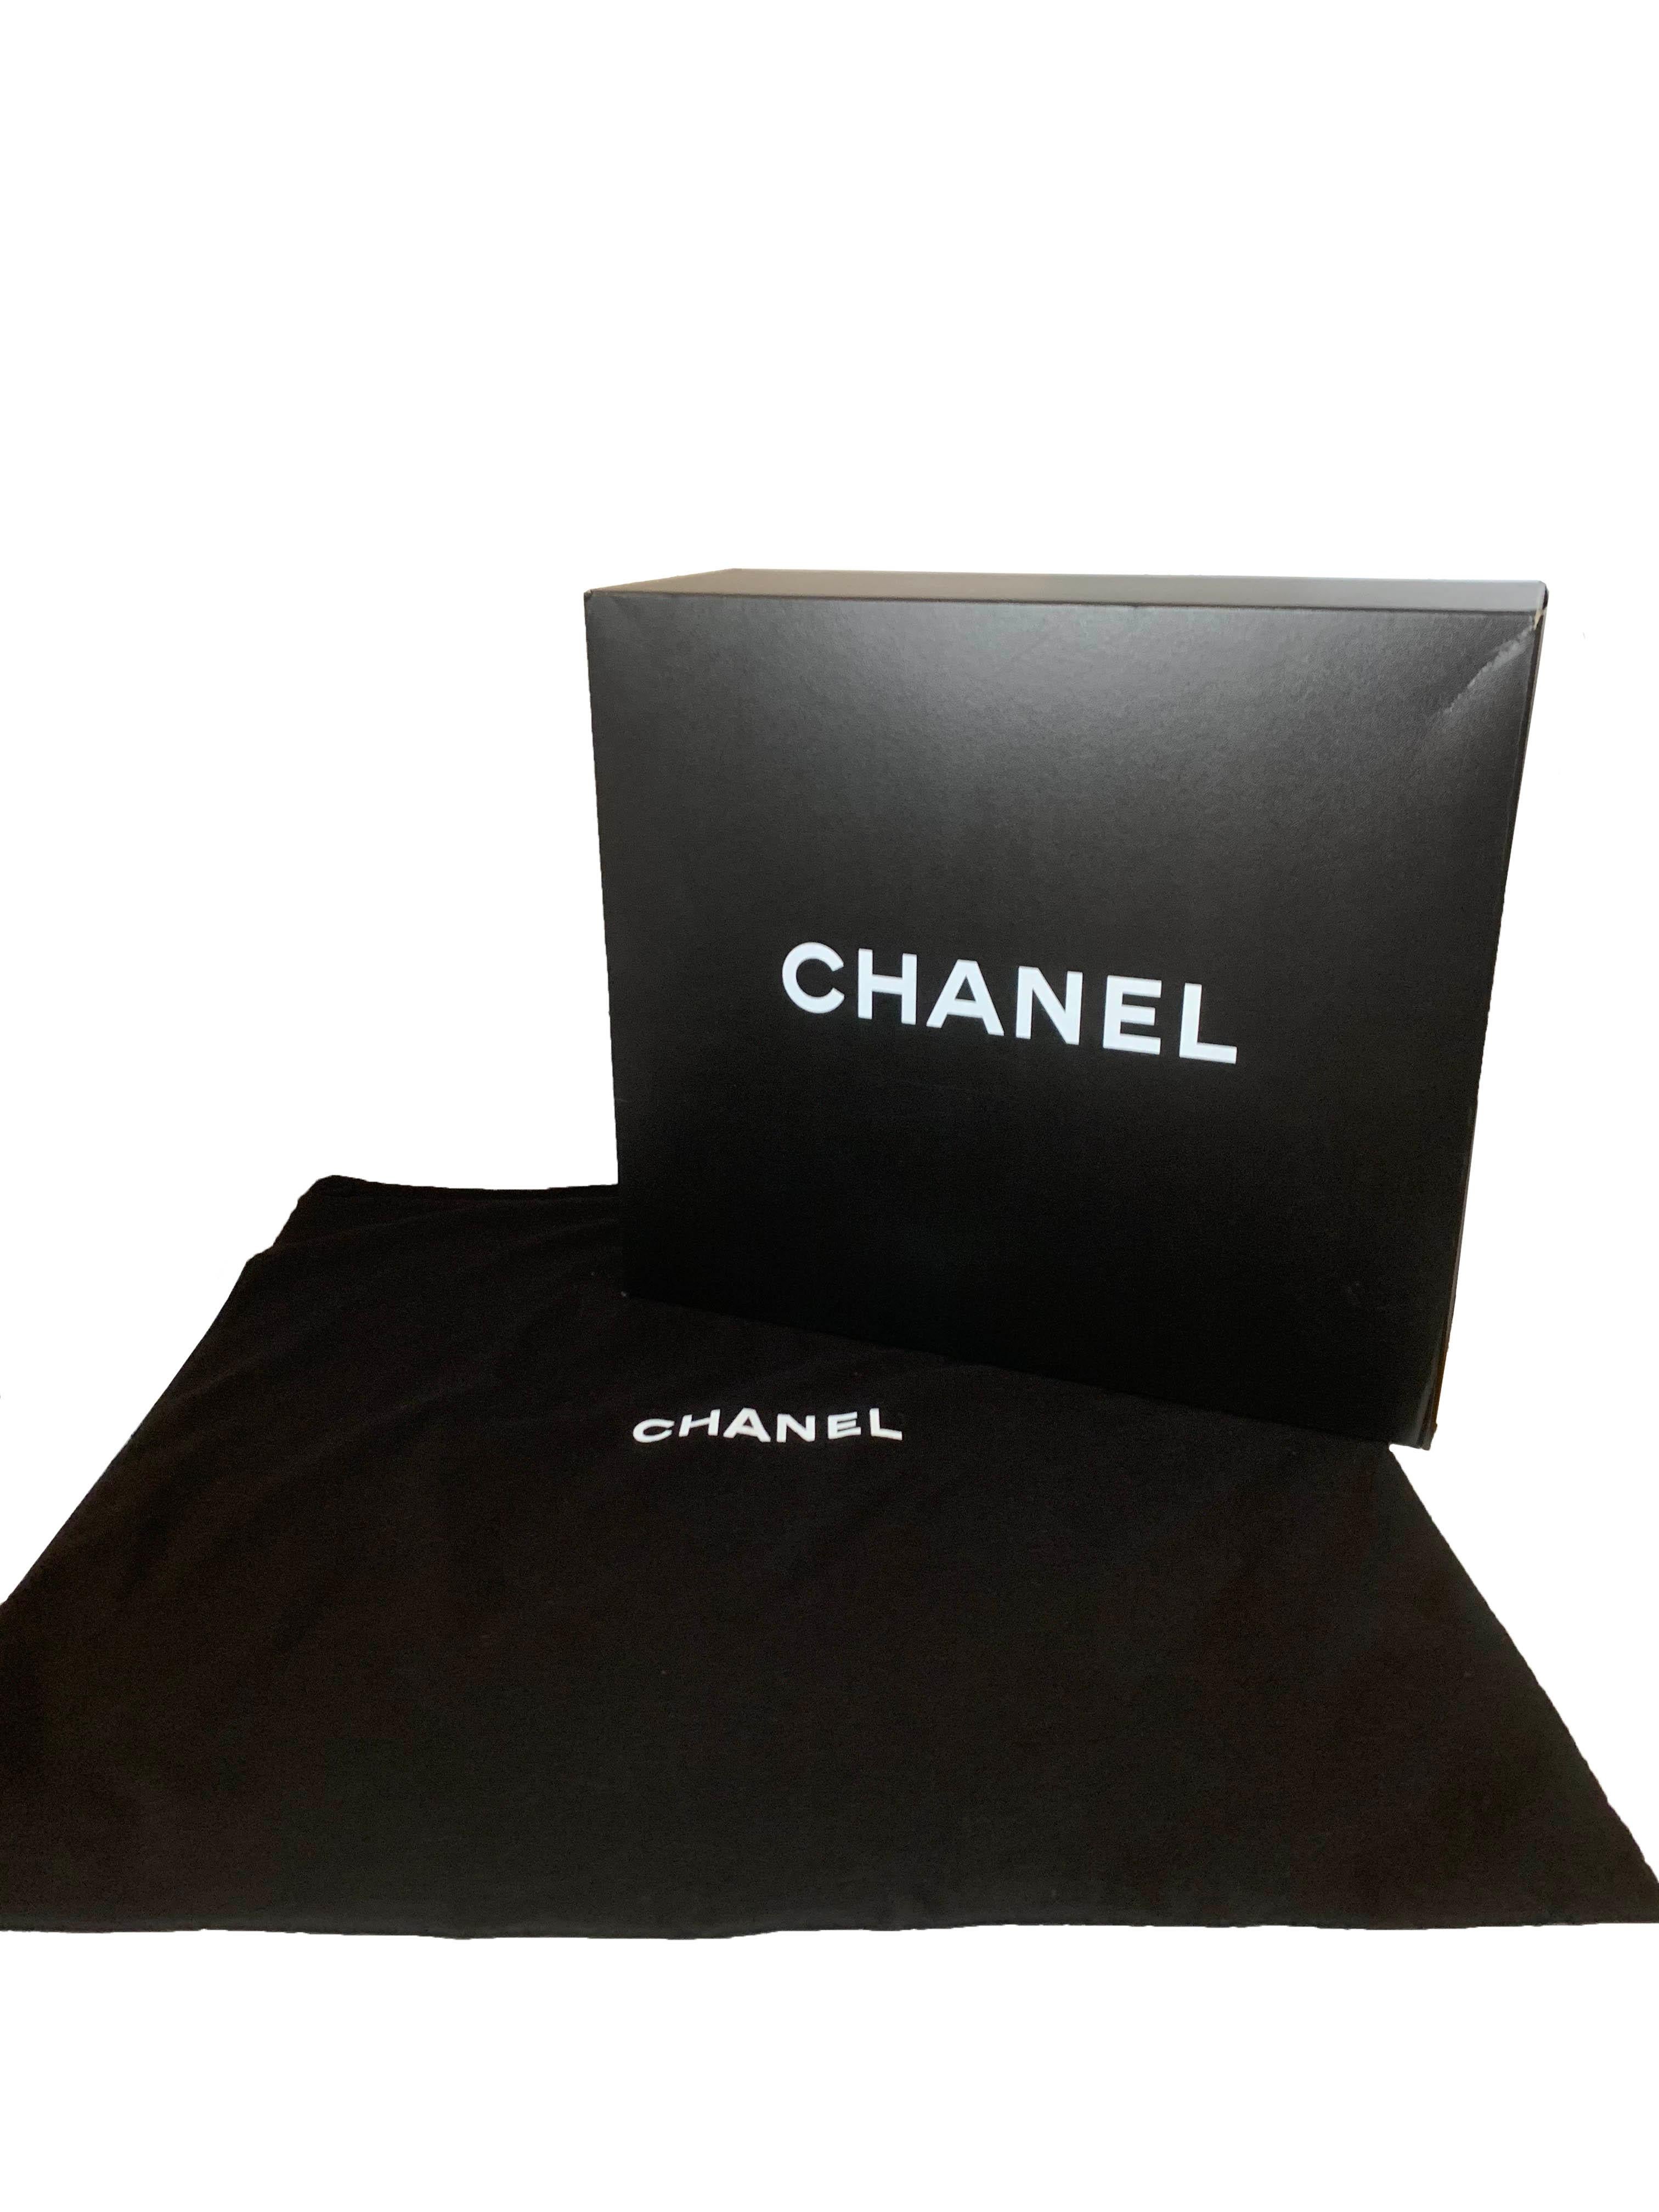 Chanel Ltd Edition Black Mesh & Patent La Madrague 2 in 1 Tote/ Classic Flap Bag 8